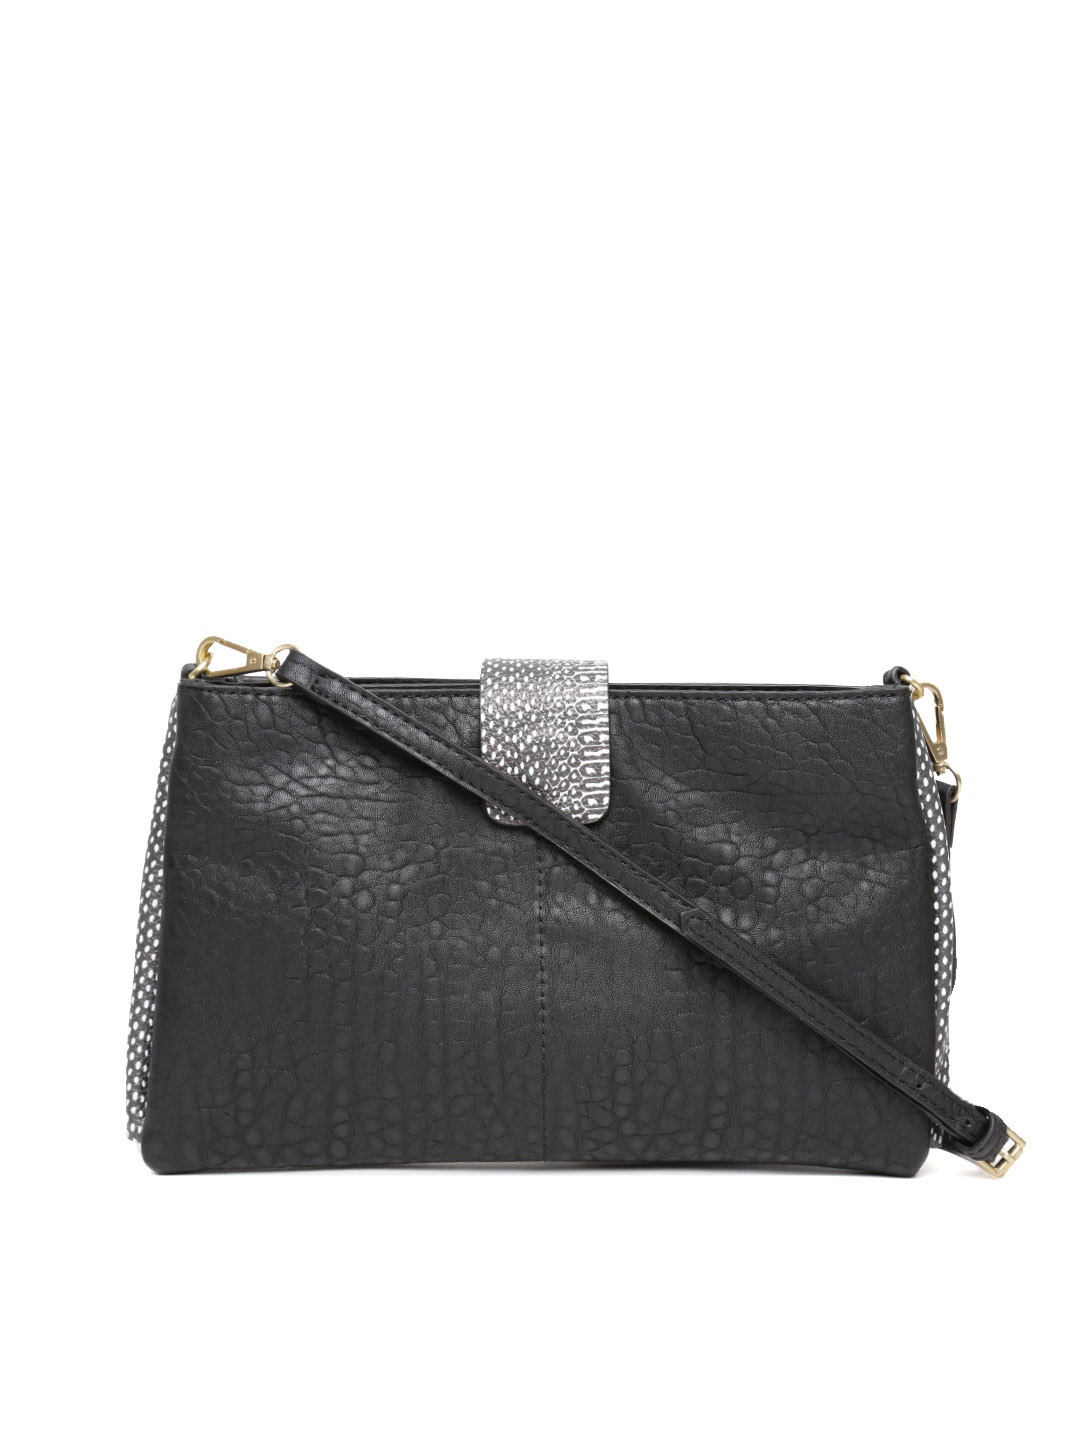 Myntra Parfois Black Sling Bag 790411 | Buy Myntra Parfois Handbags at ...